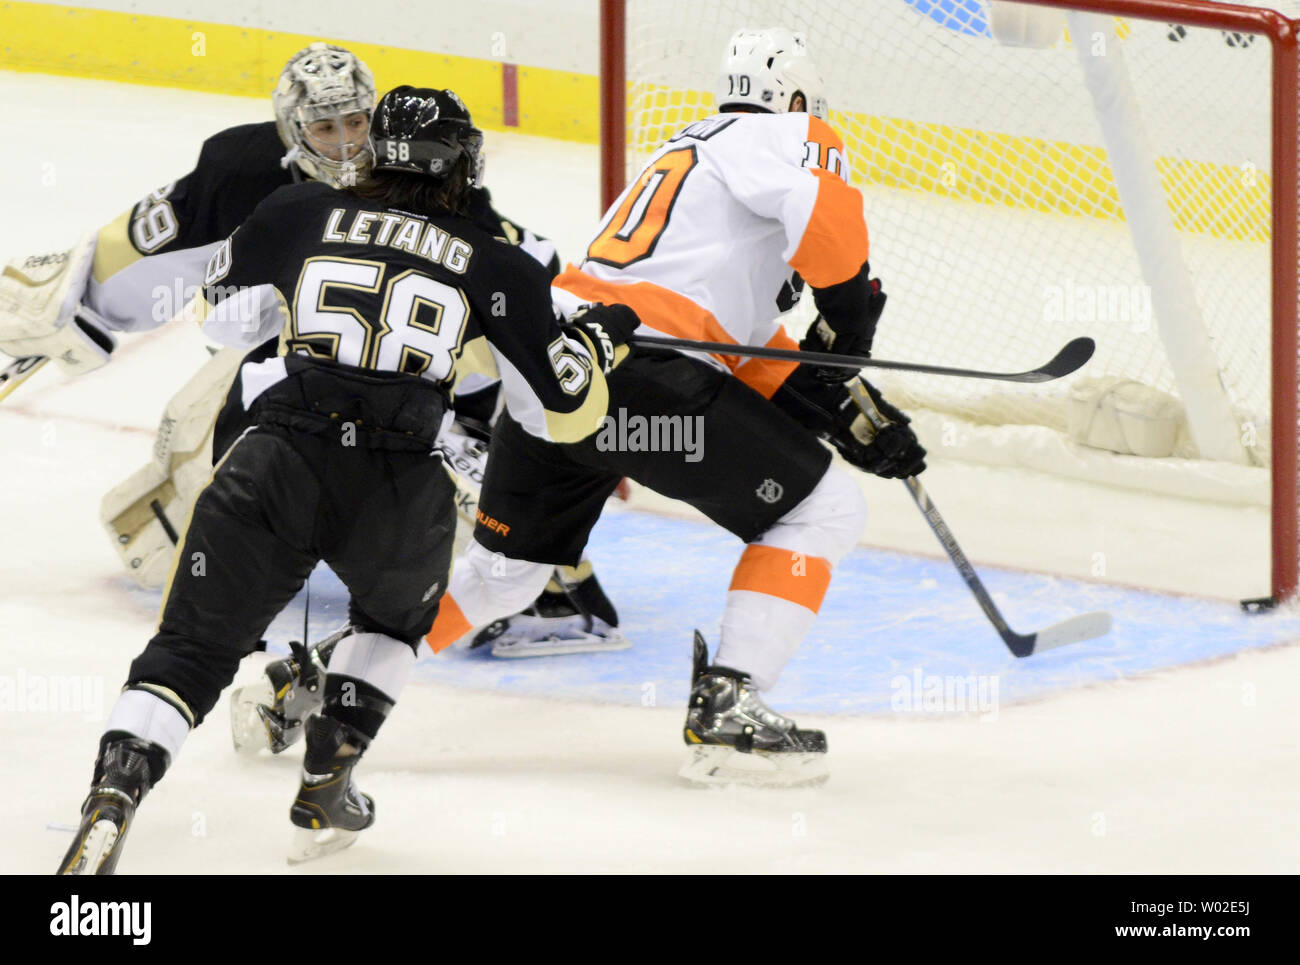 Can Brayden Schenn save the Flyers? – Metro Philadelphia